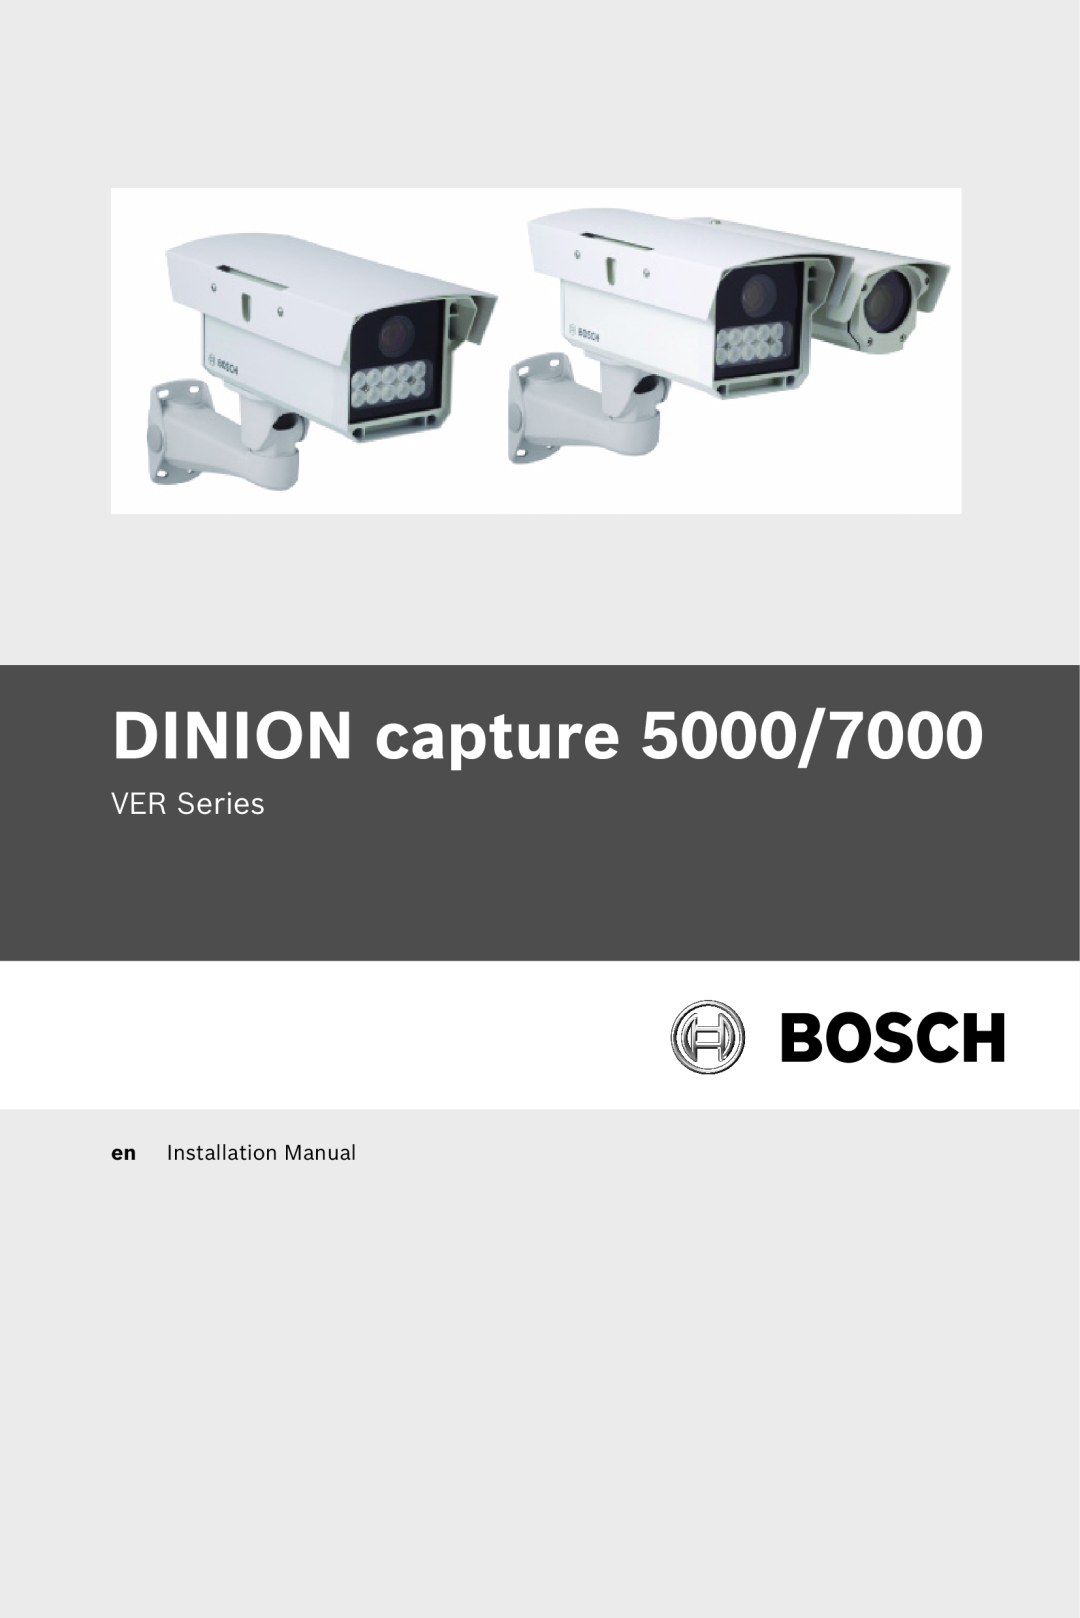 Bosch Appliances installation manual DINION capture 5000/7000, VER Series, en Installation Manual 